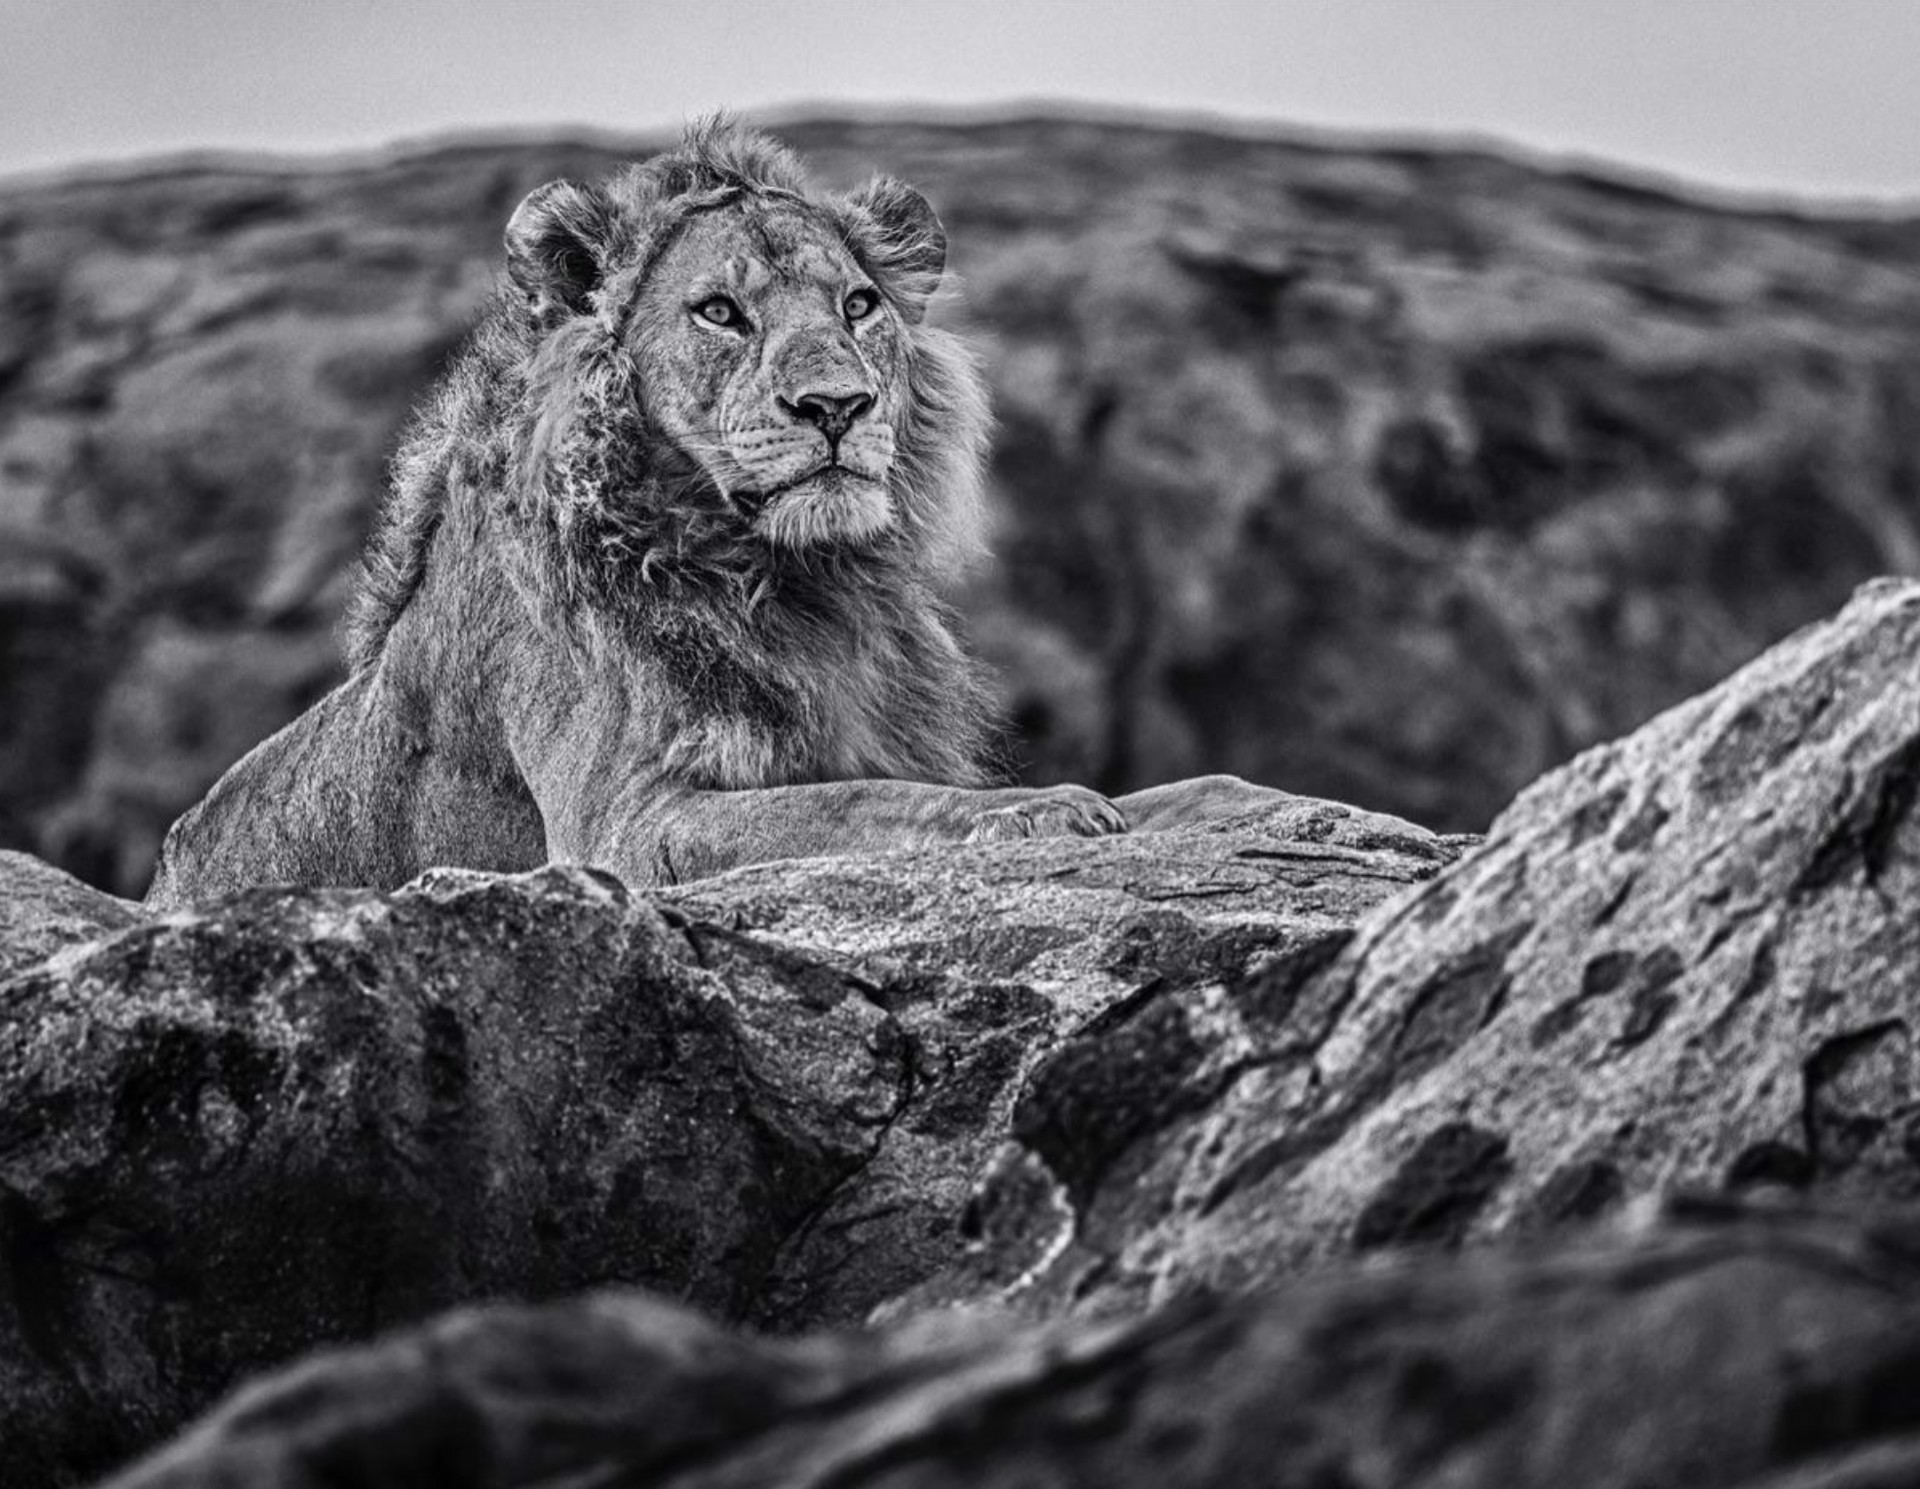 Serengeti by David Yarrow